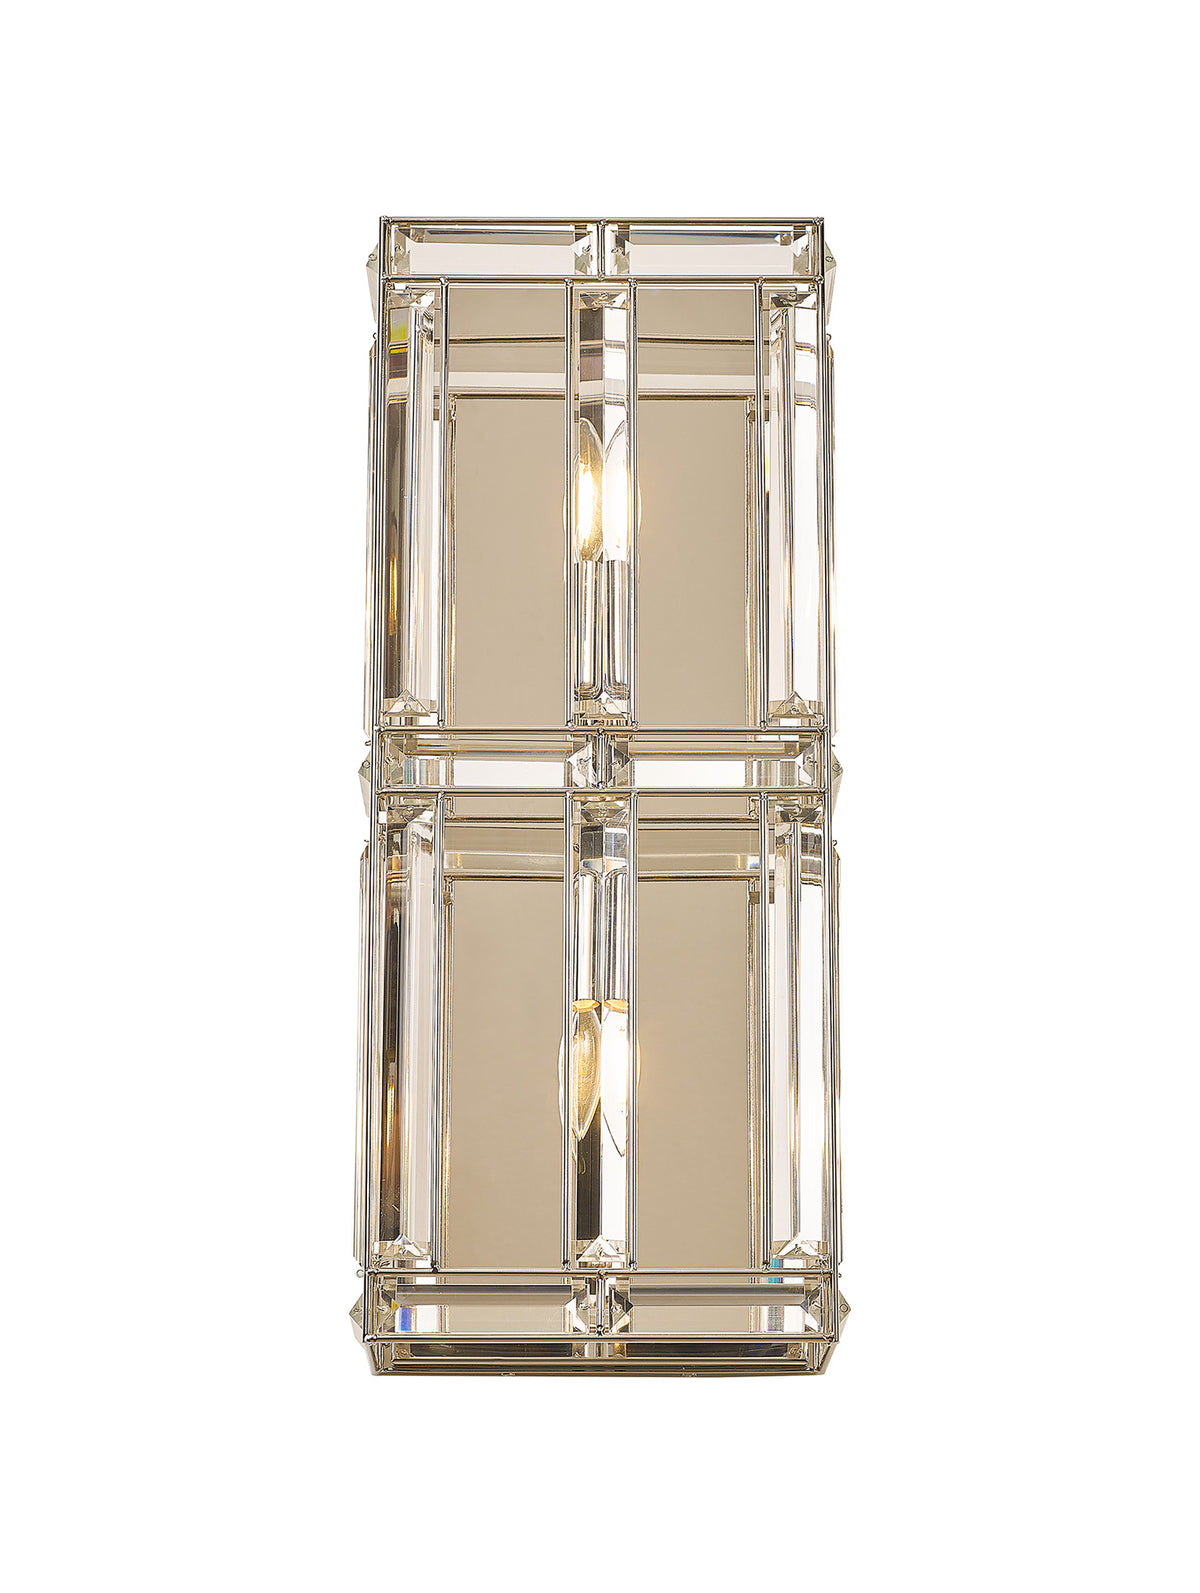 Hound Rectangular/Square Wall Light, 2 Light E14, Polished Nickel